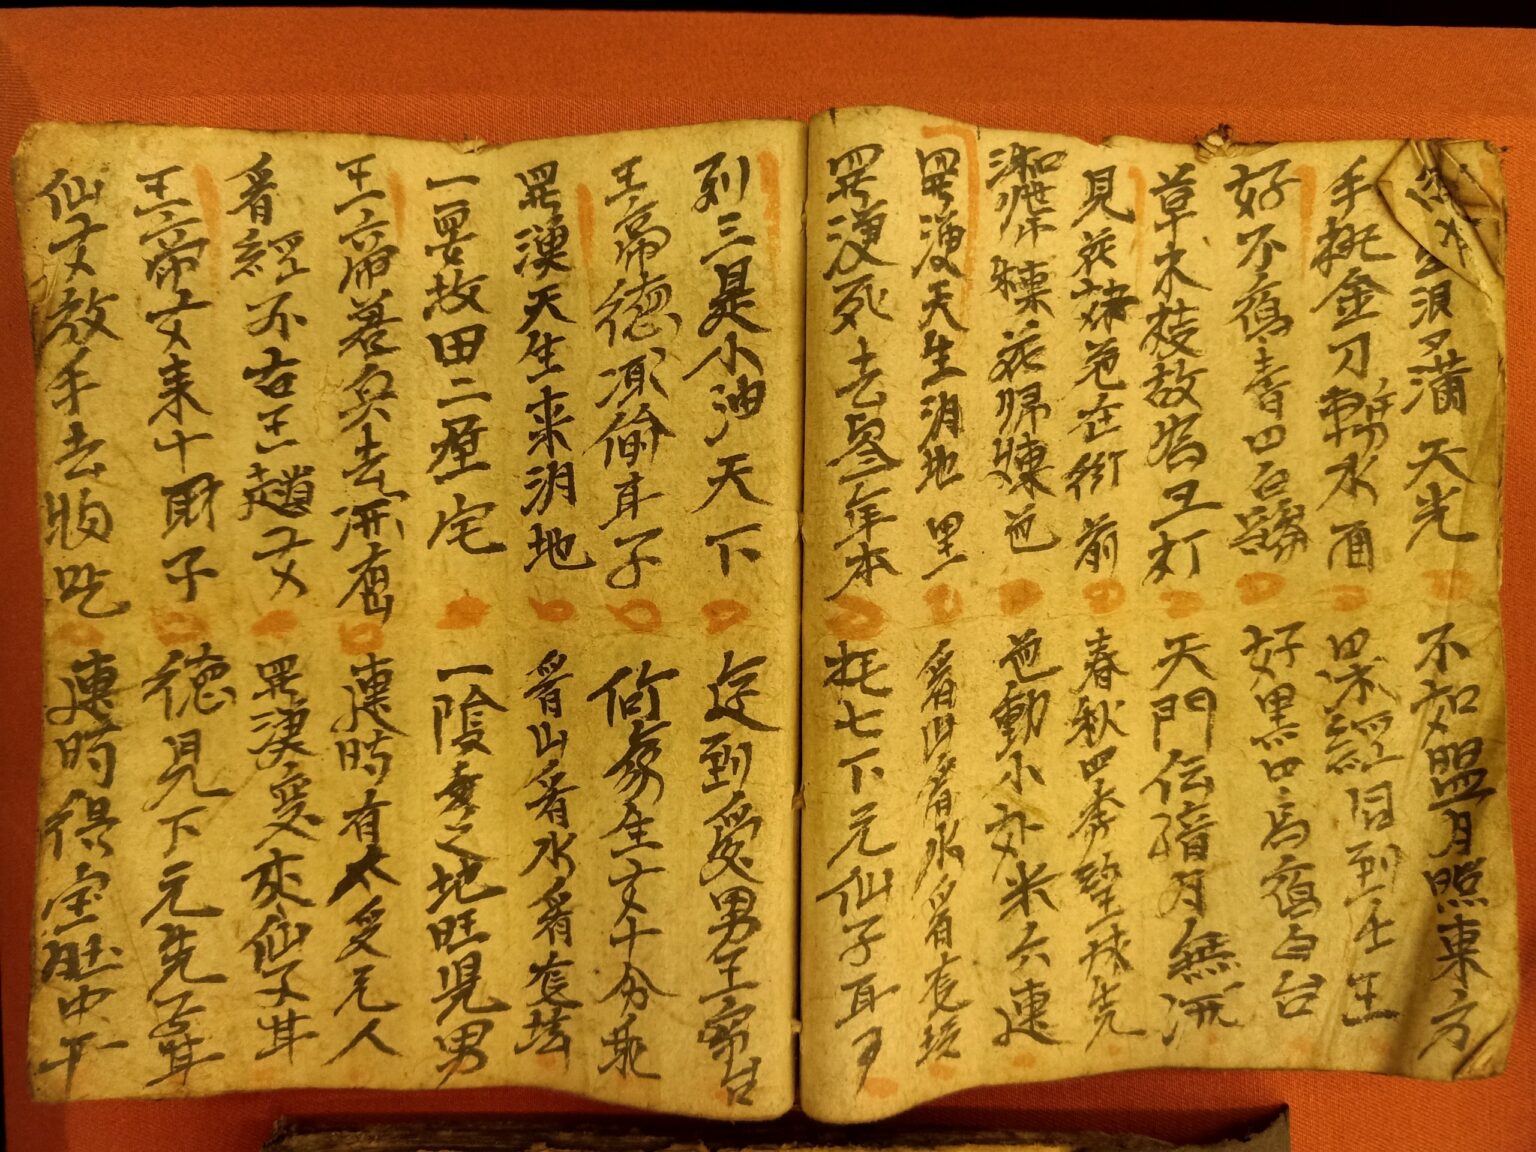 The Nom – Ancient Vietnamese Script